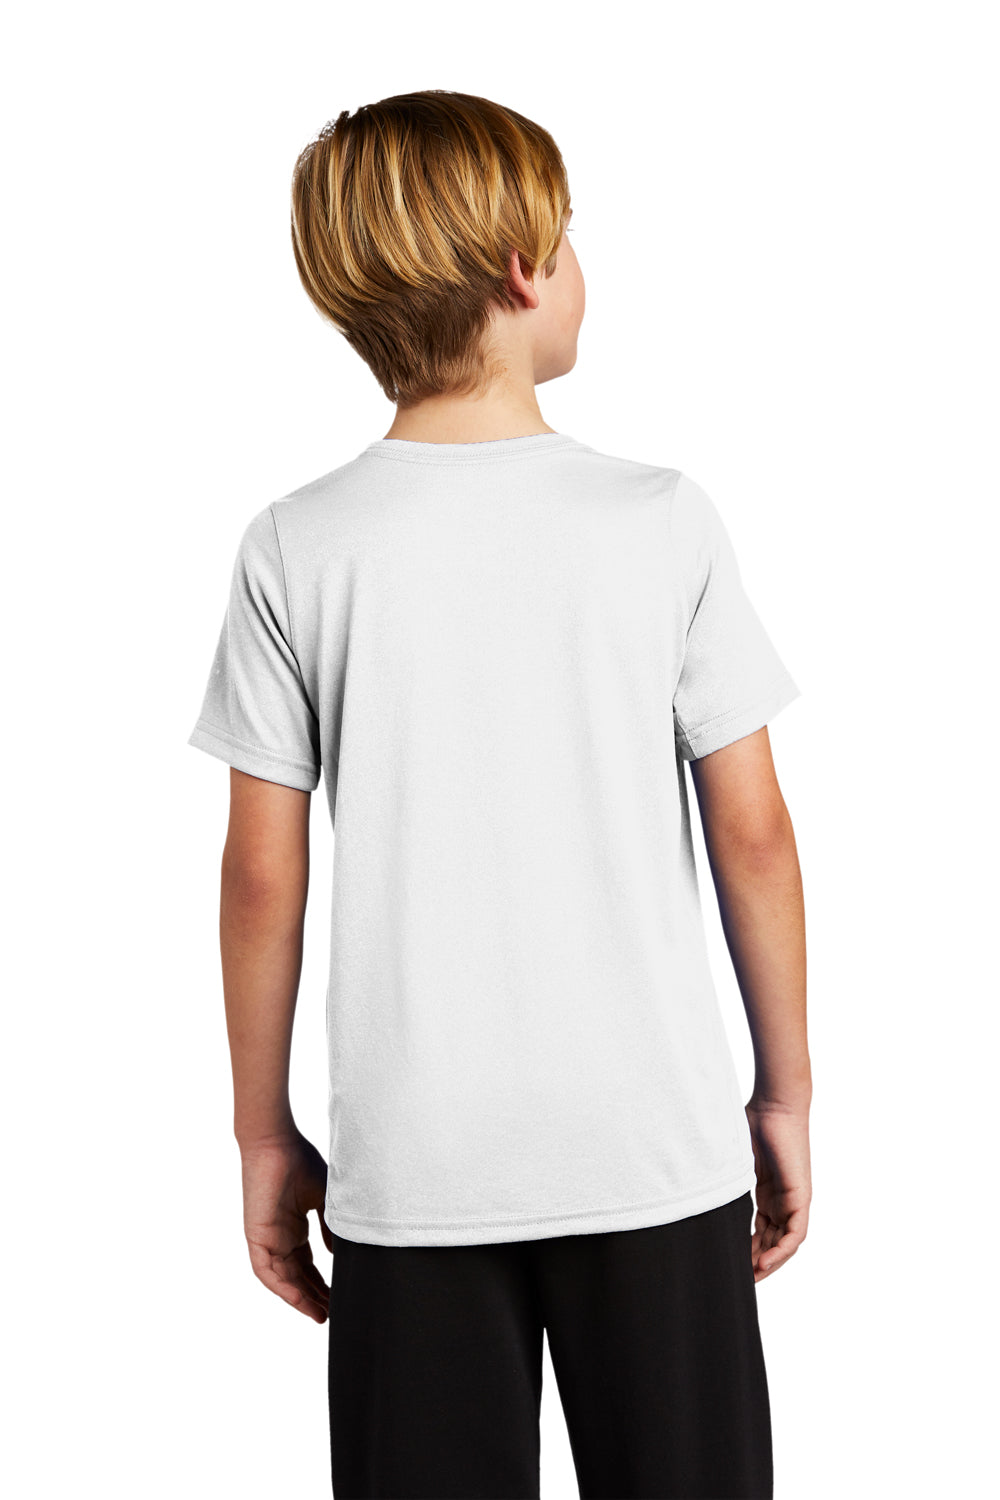 Nike 840178 Youth Legend Dri-Fit Moisture Wicking Short Sleeve Crewneck T-Shirt White Model Back